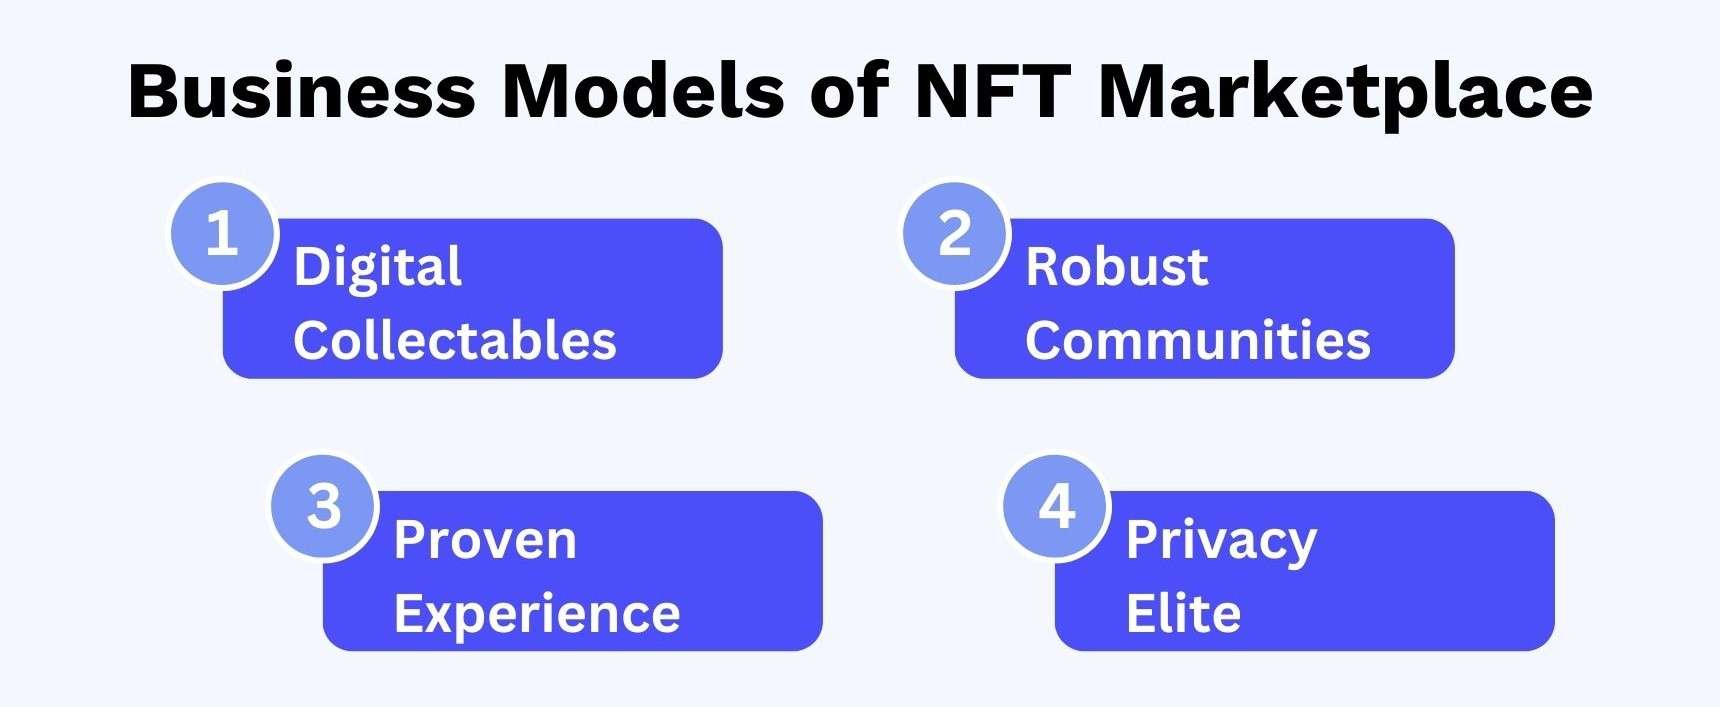 Business Models of NFT Marketplace